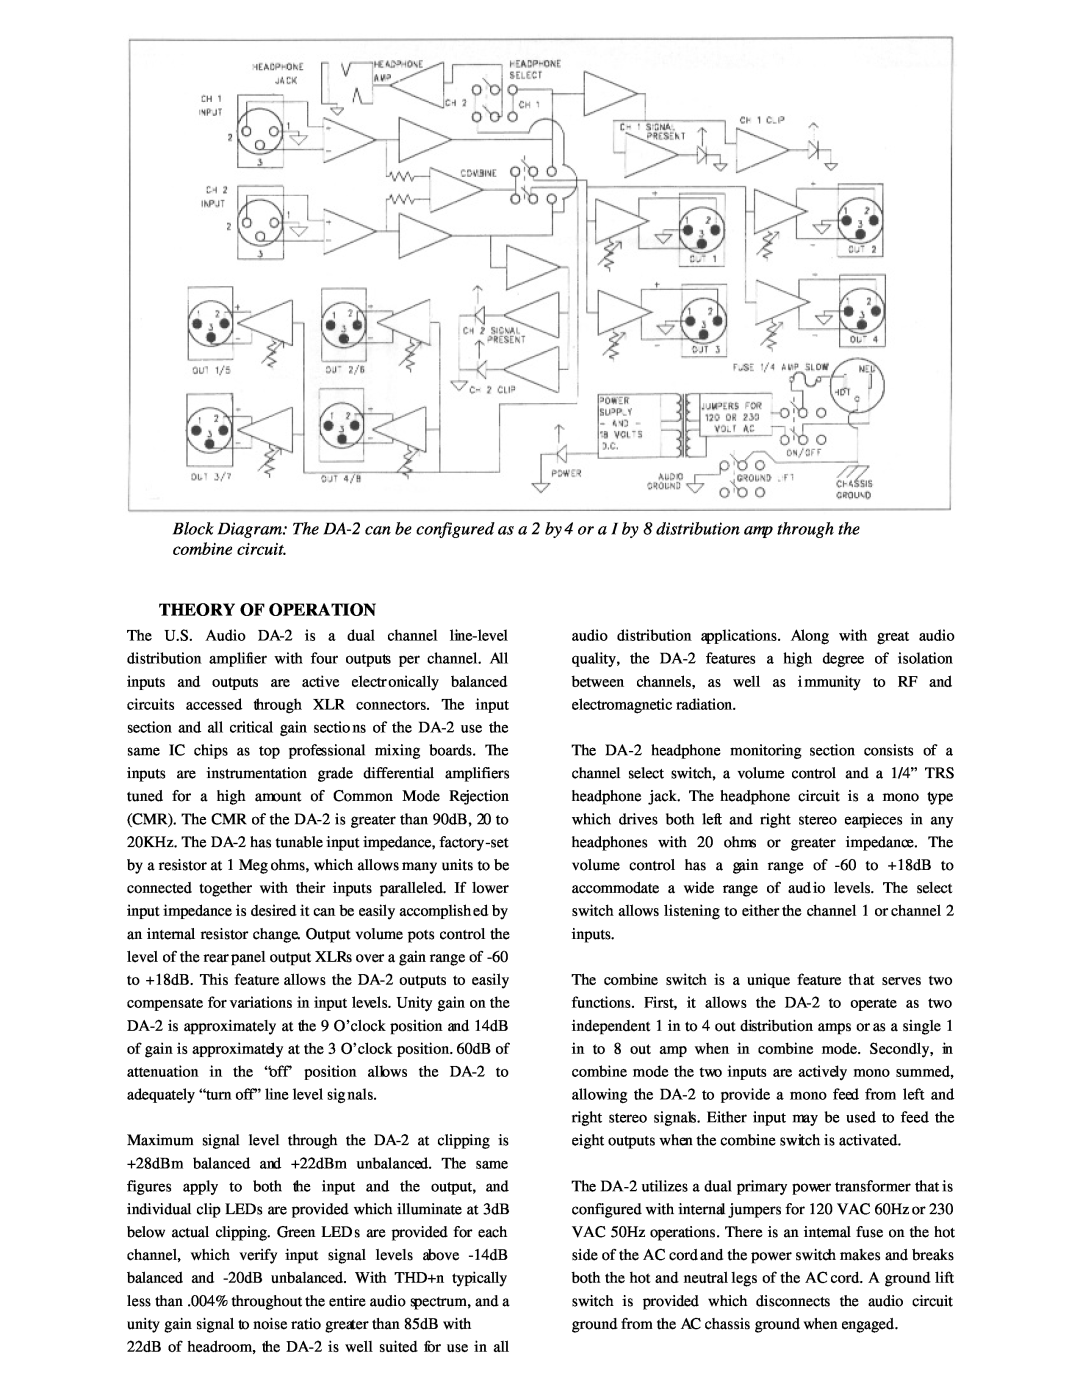 Whirlwind DA-2 manual combine circuit, Theory Of Operation 